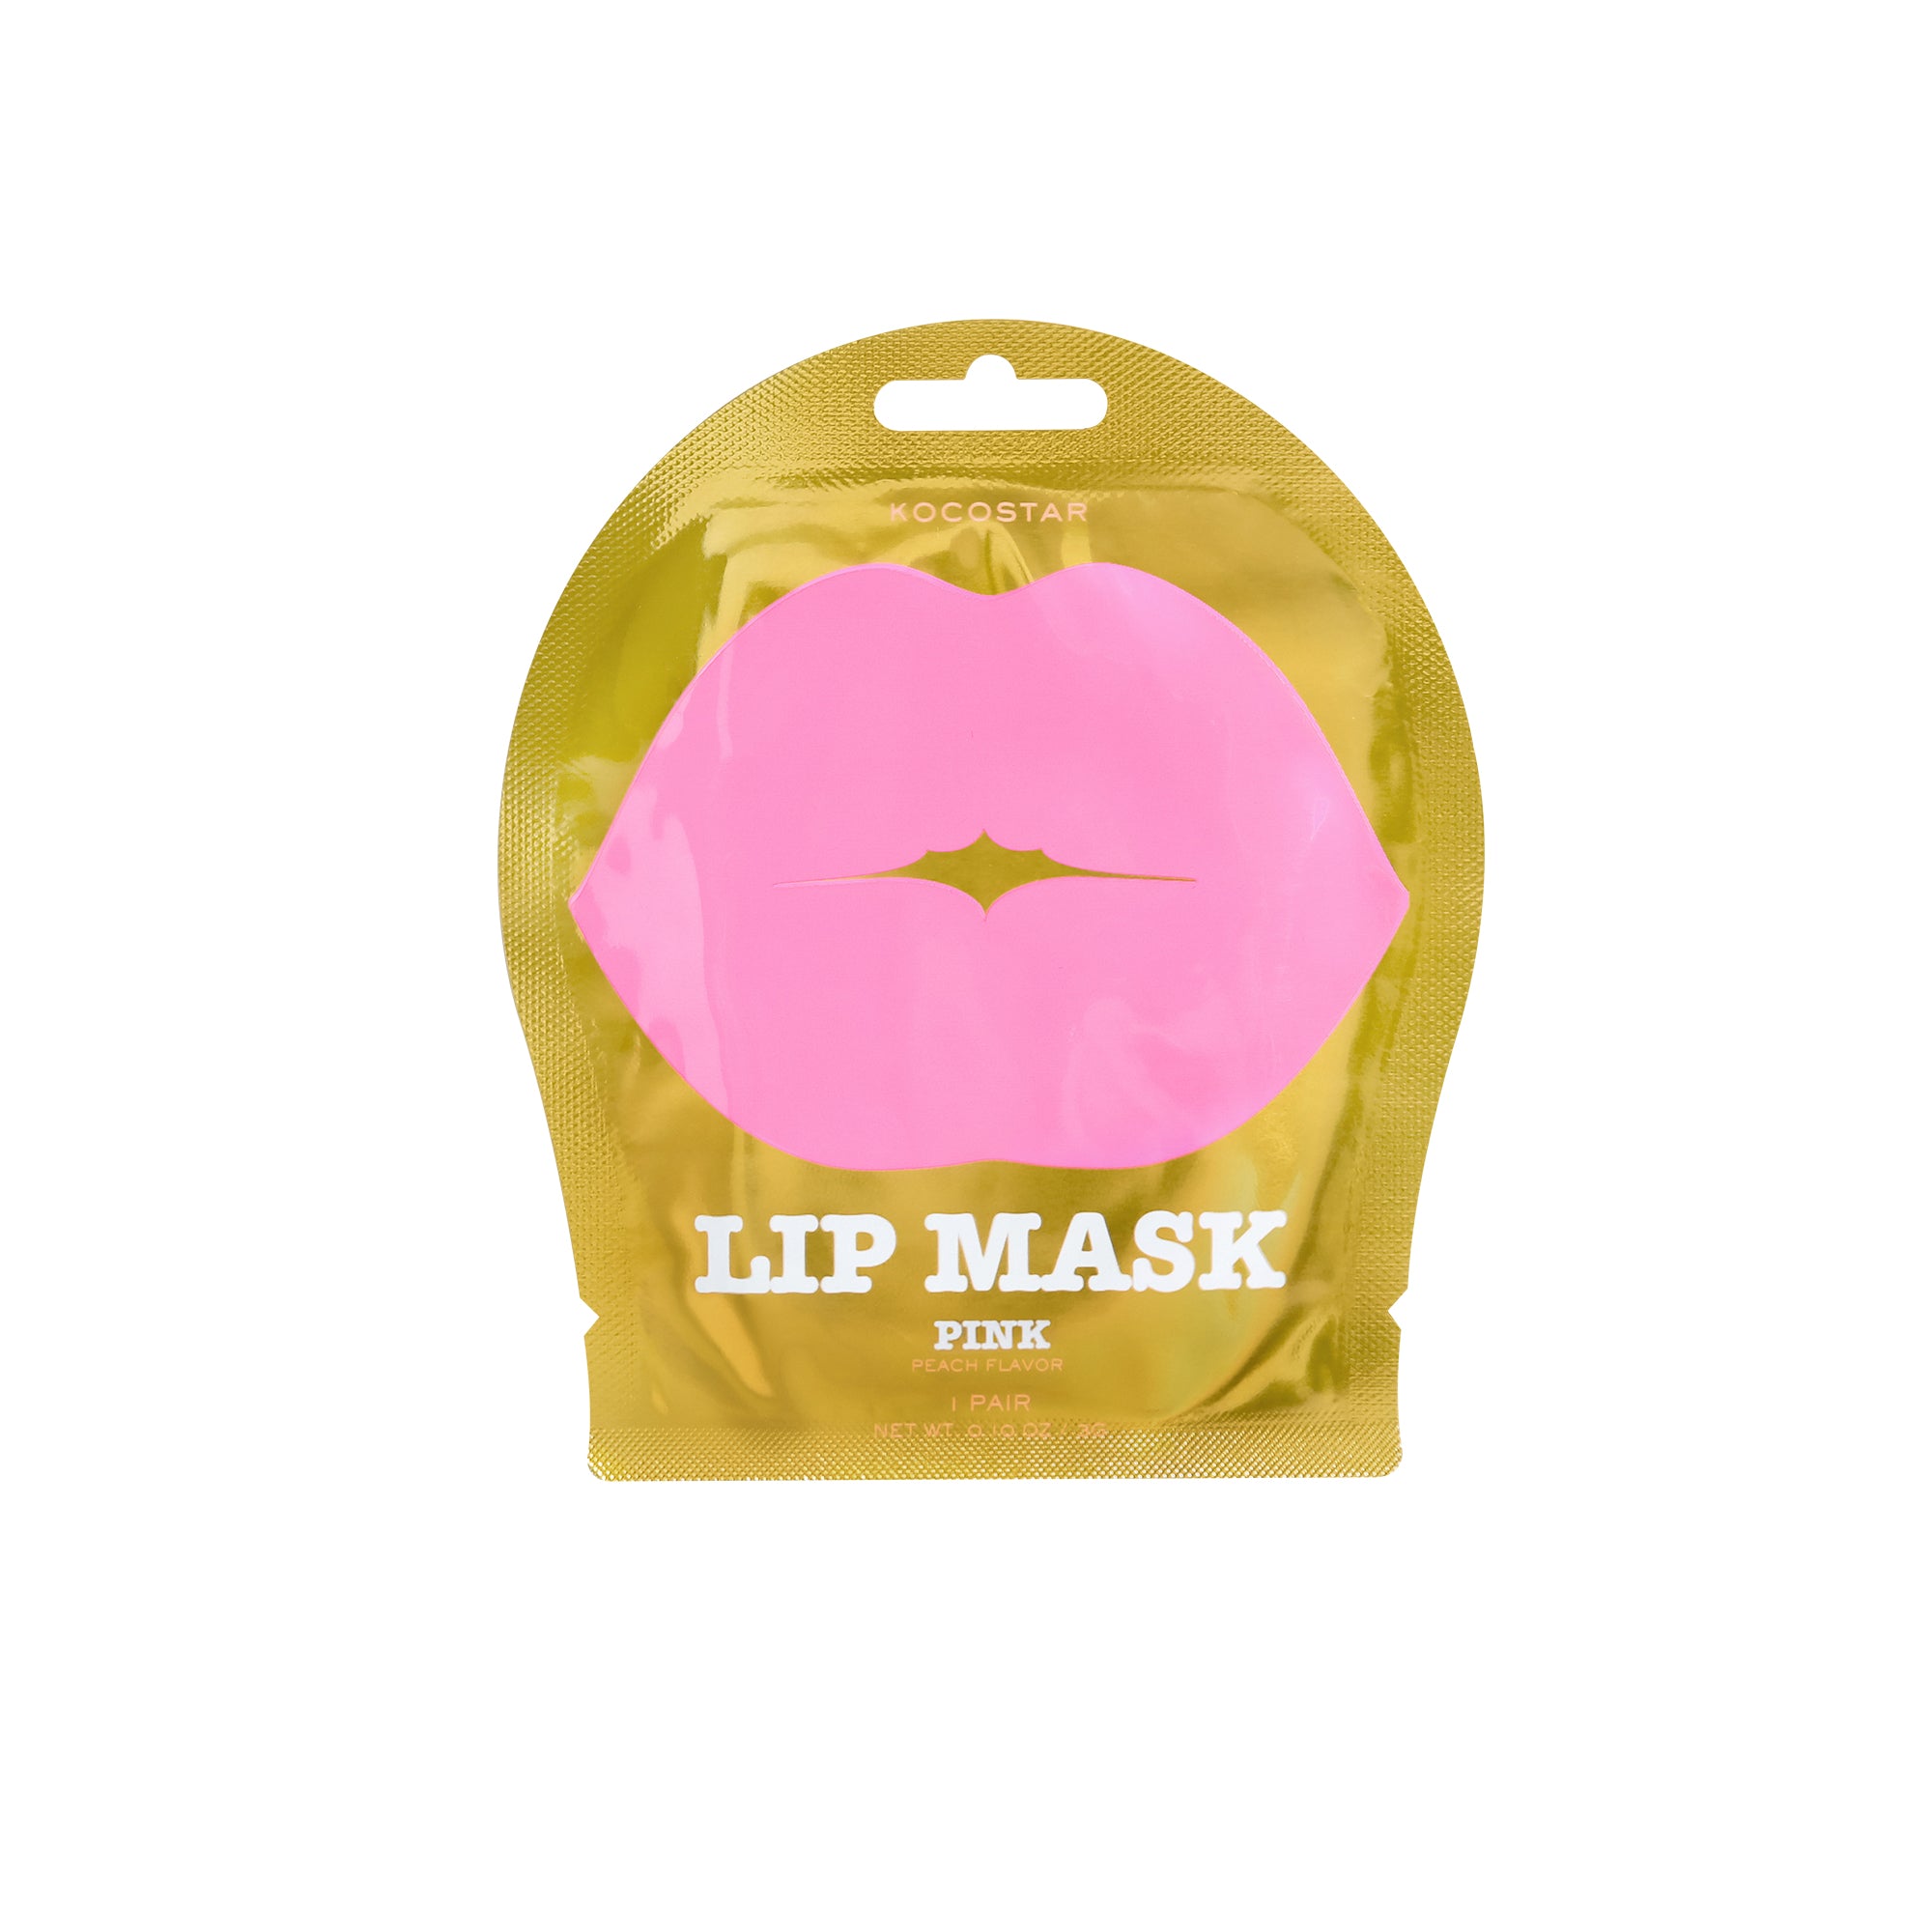 Kocostar Lip Mask Pink Single